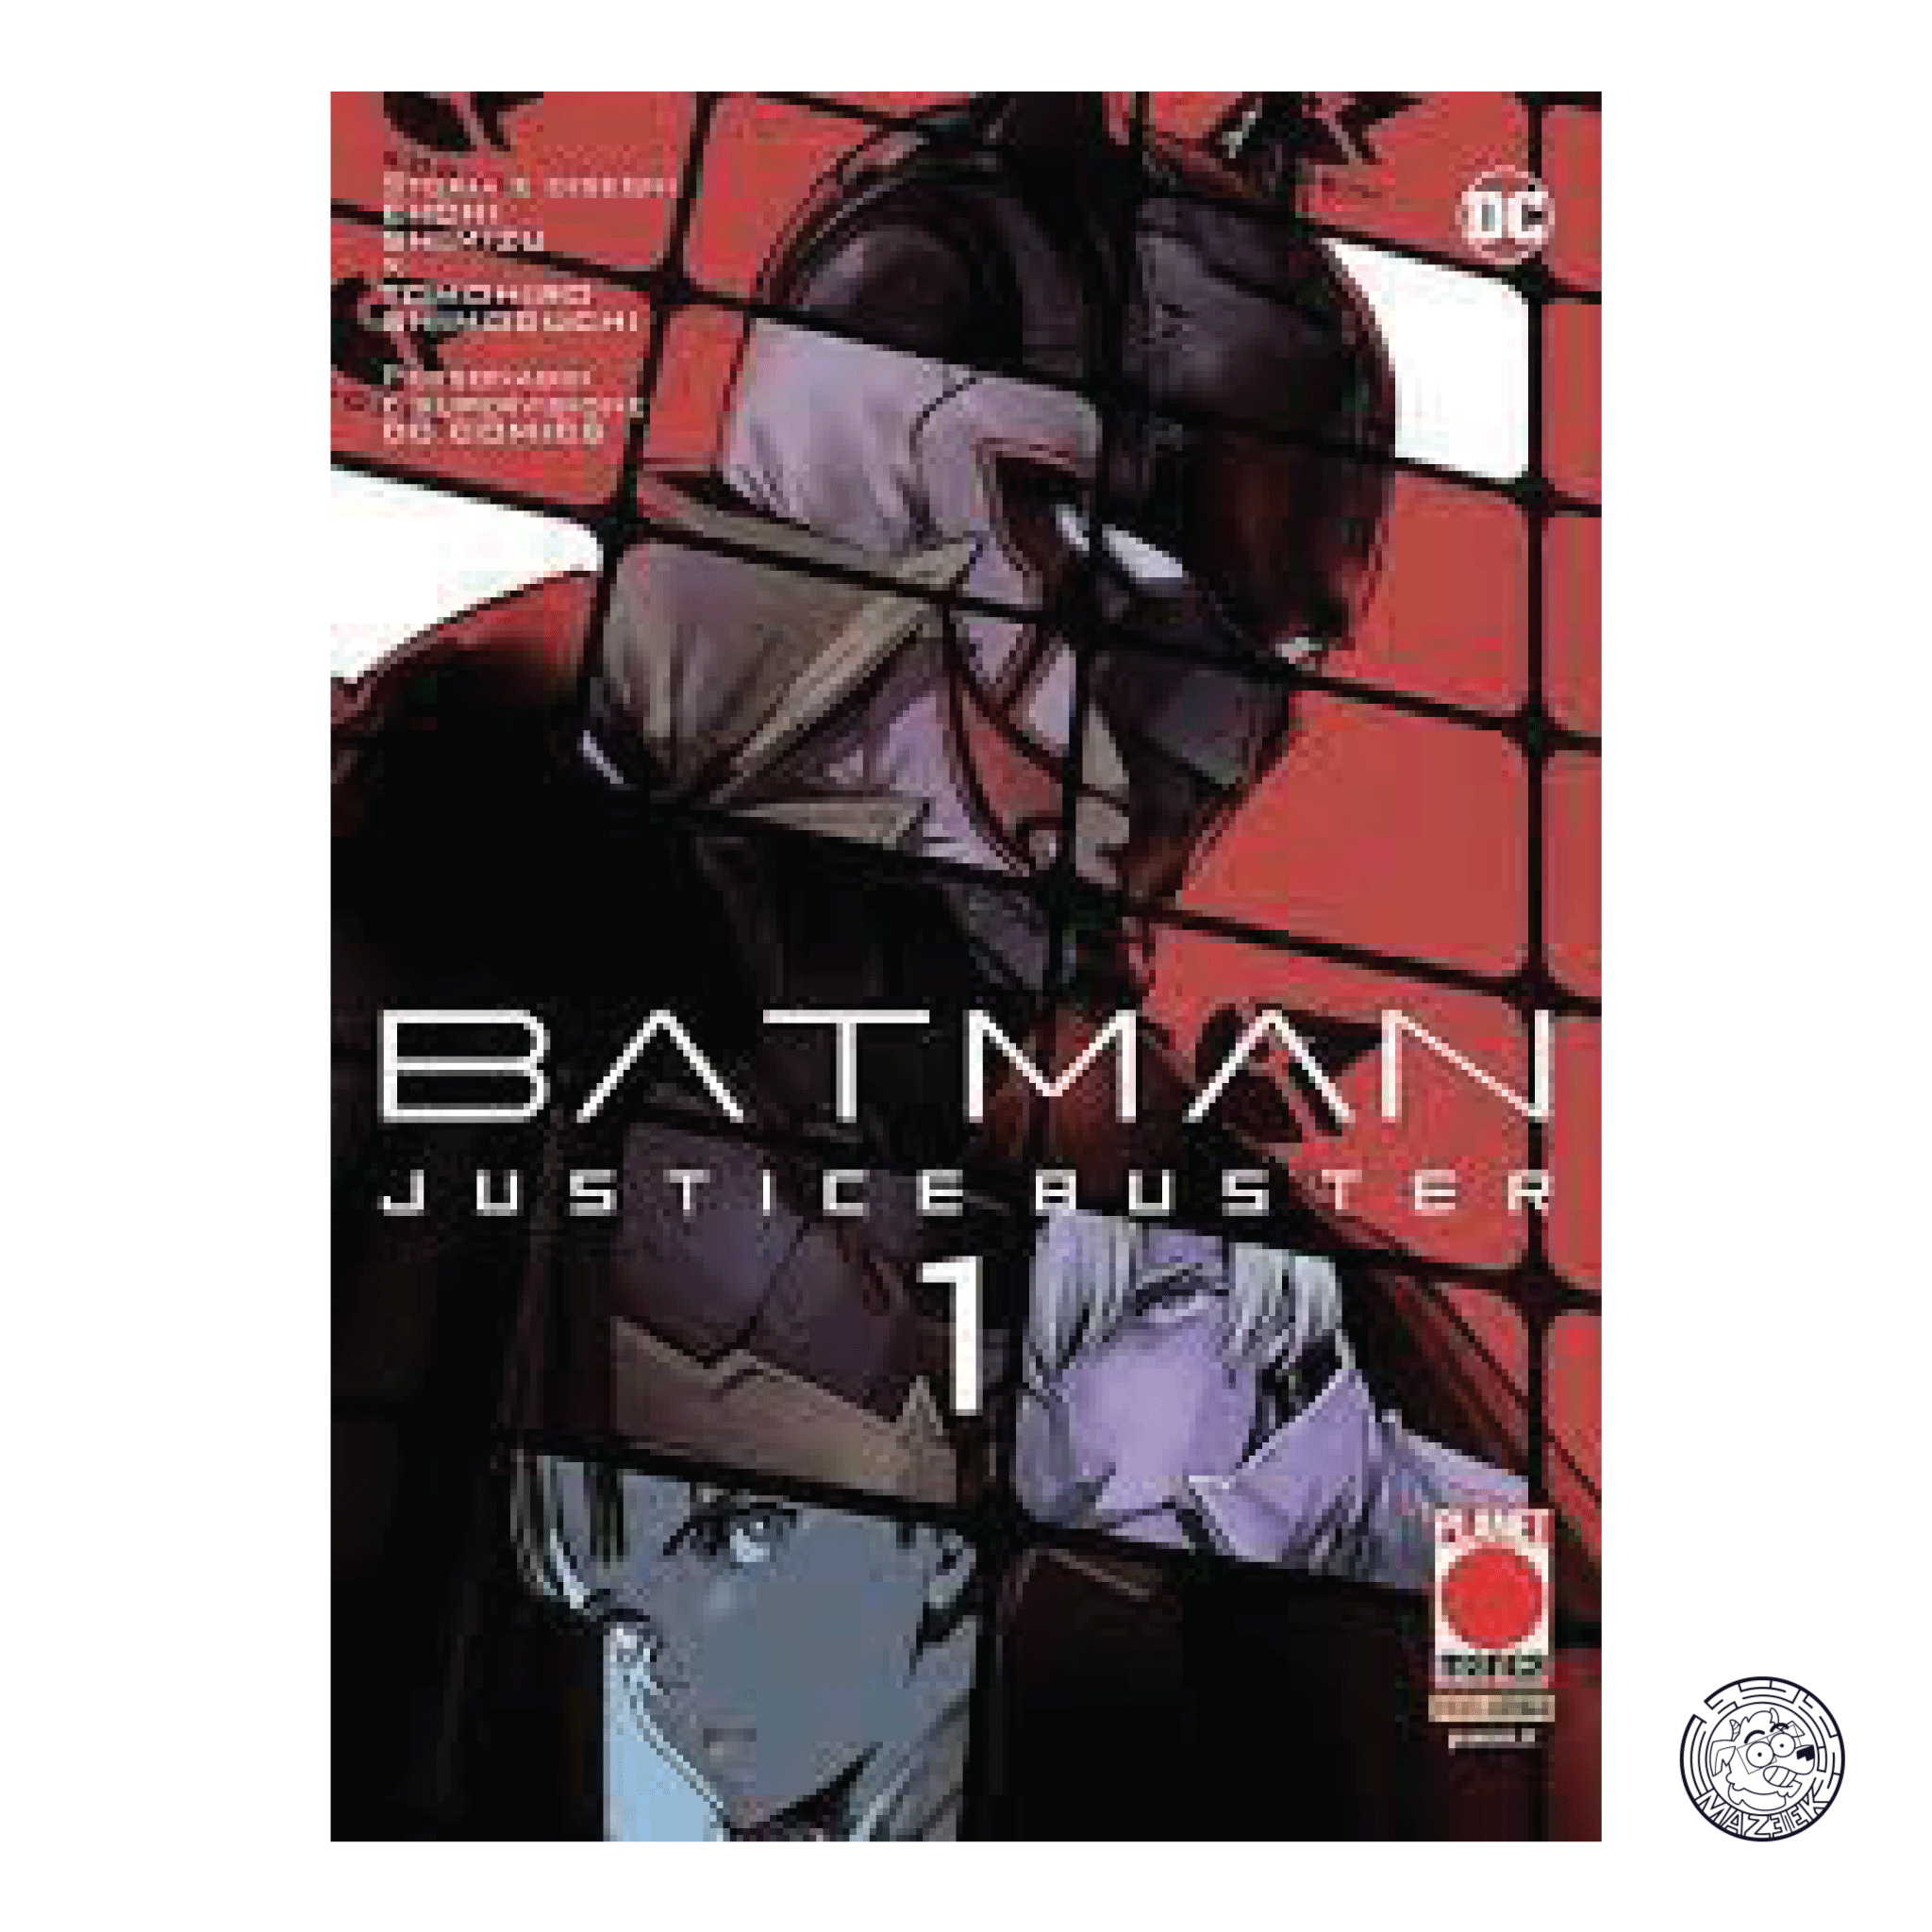 Batman Justice Buster 01